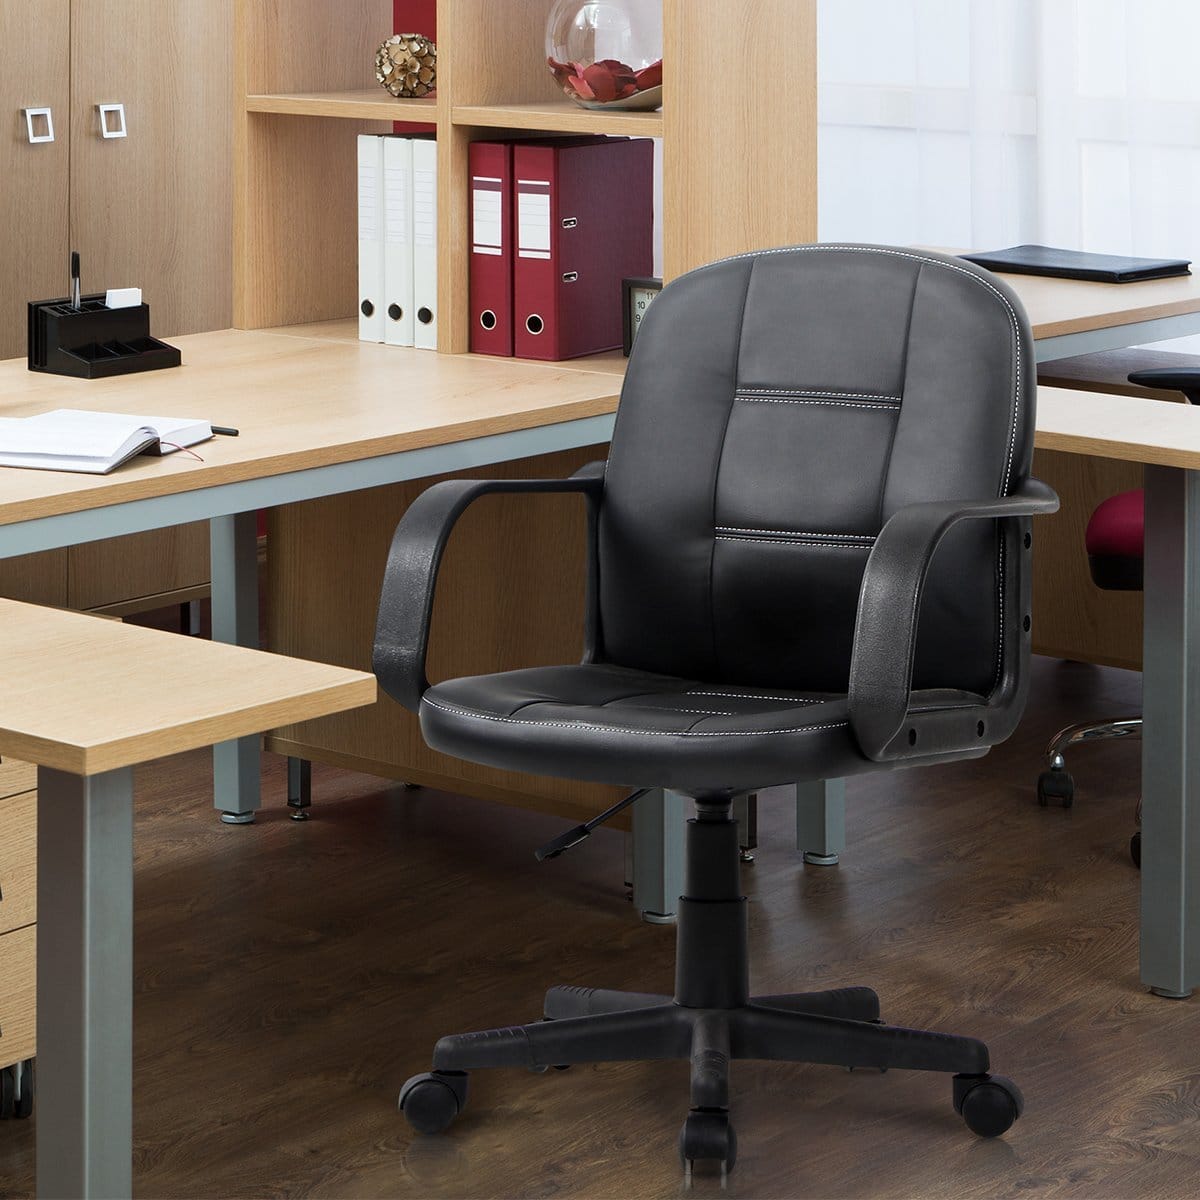 DEAL ALERT: VIVA OFFICE Ergonomic Mid Back Office Chair, Bonded Leather Computer Task Chair